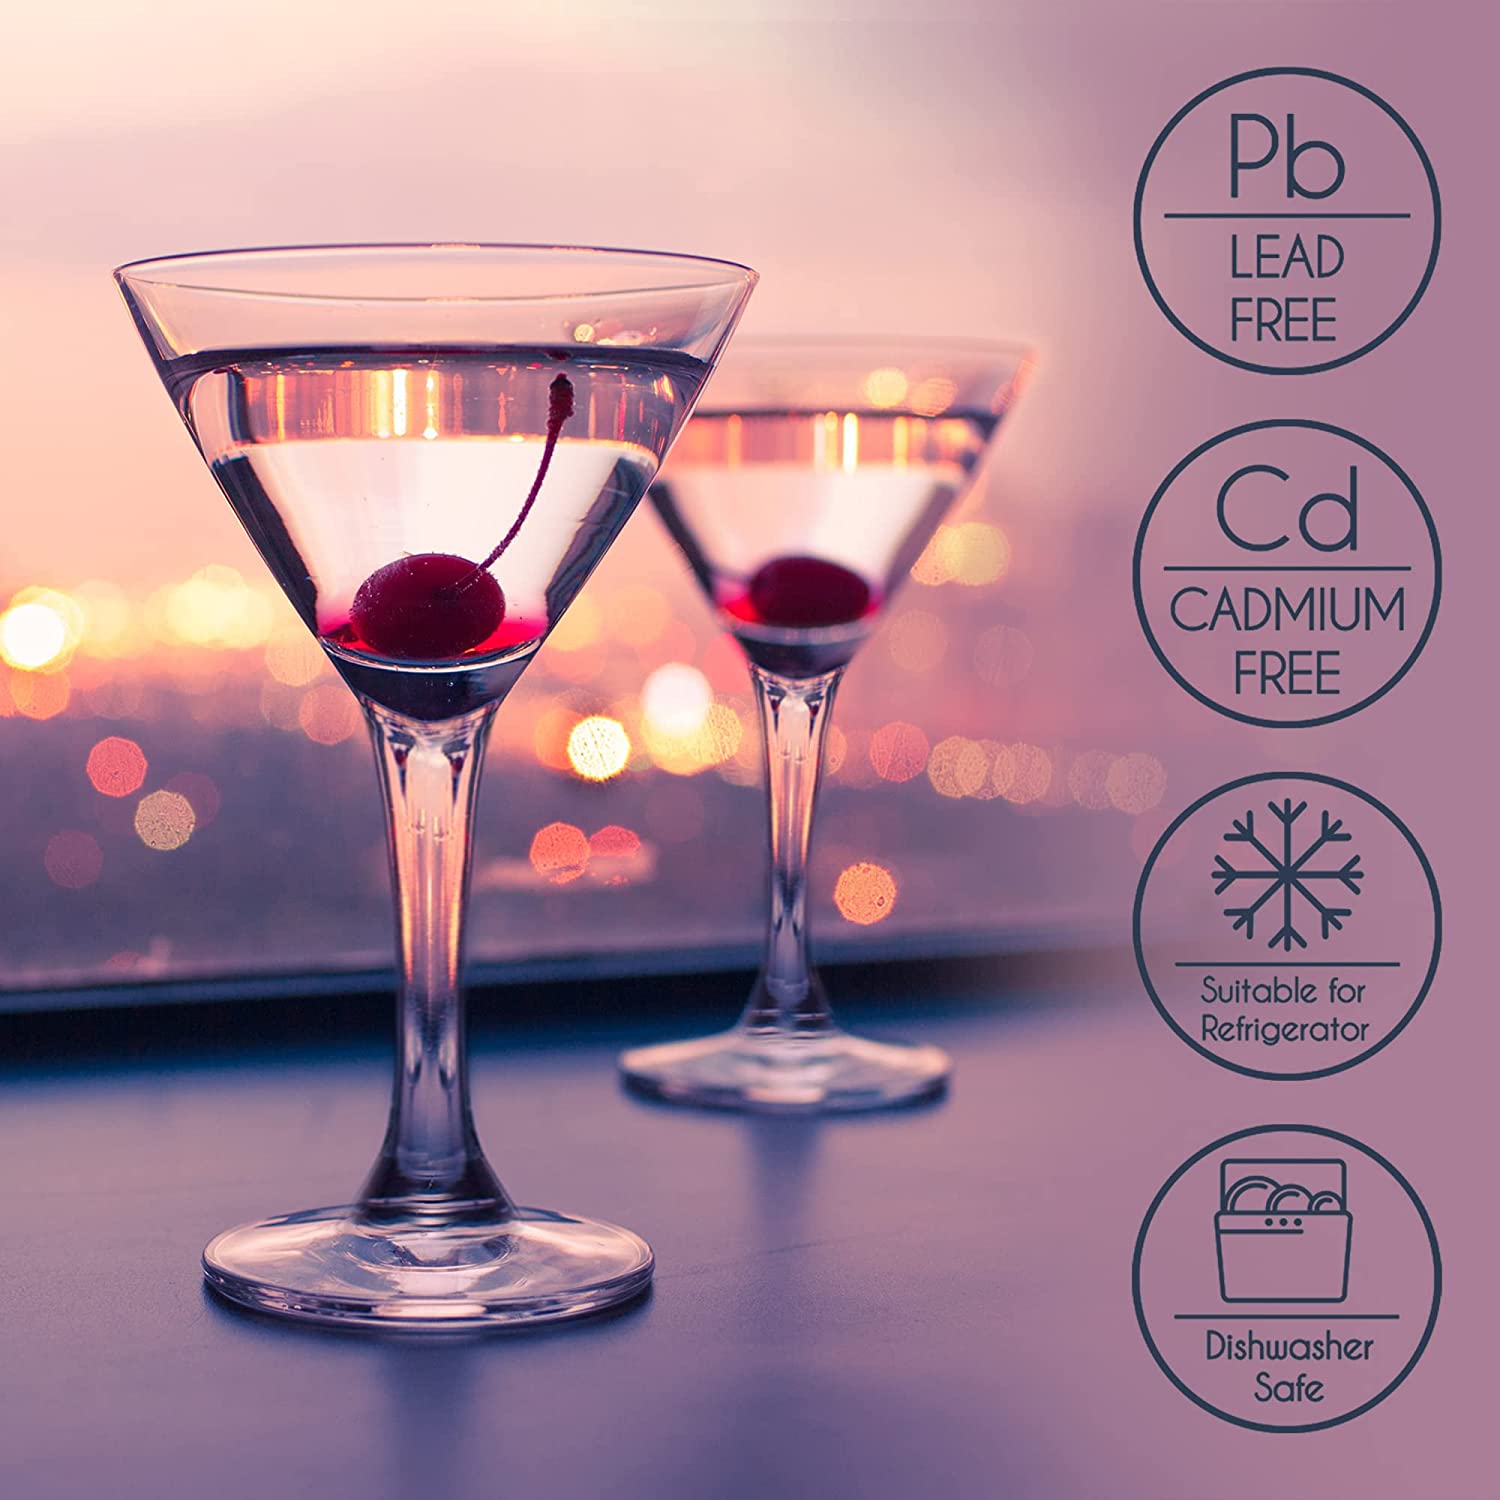 Crystalia Stemless Martini Glasses, Set of 4